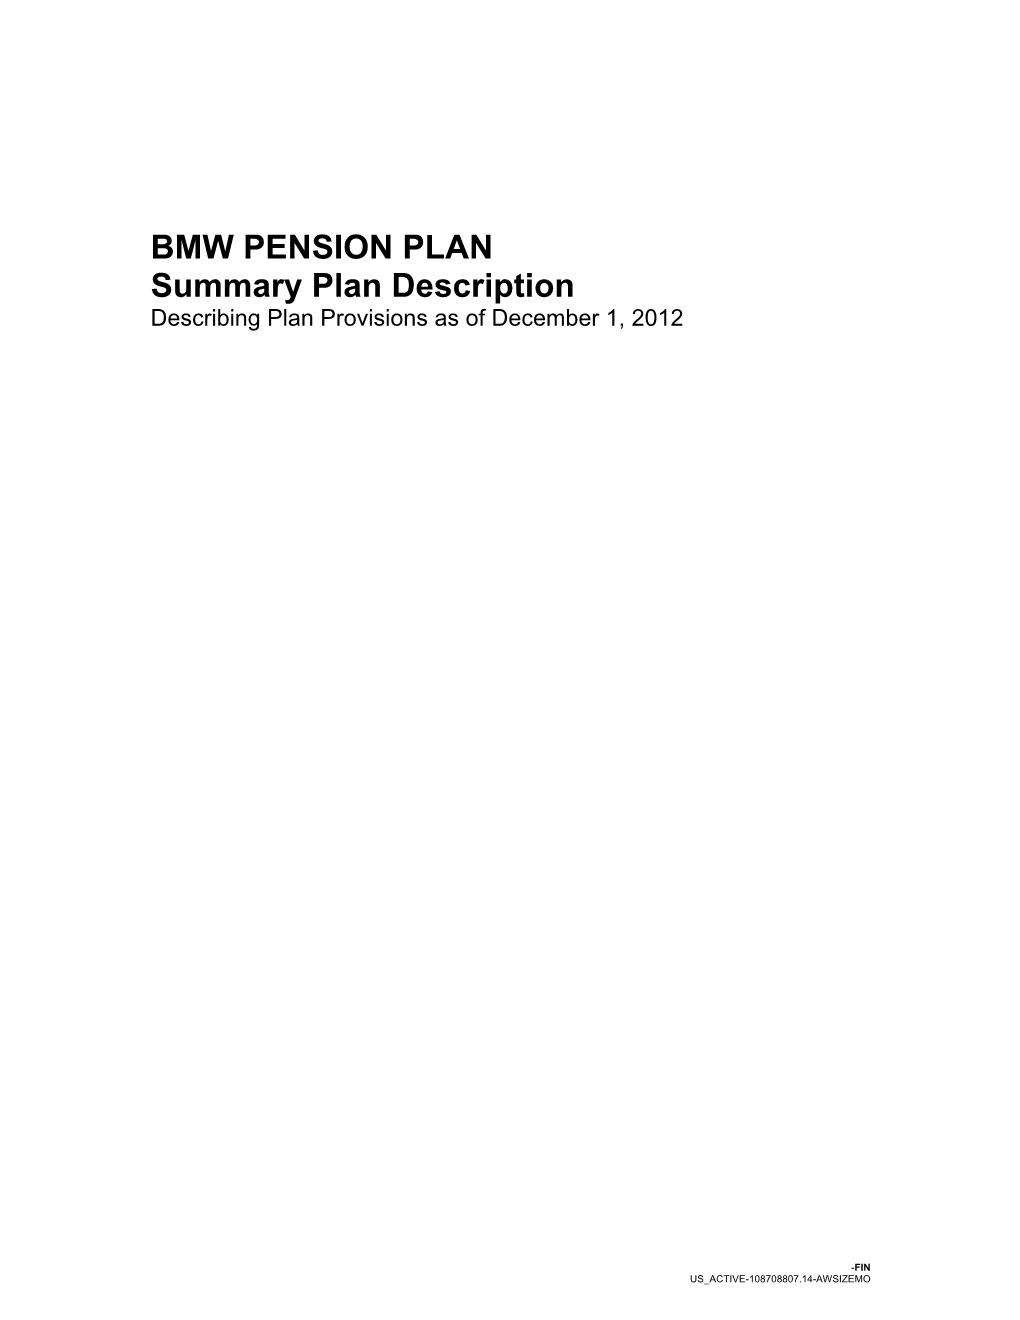 BMW PENSION PLAN Summary Plan Description Describing Plan Provisions As of December 1, 2012